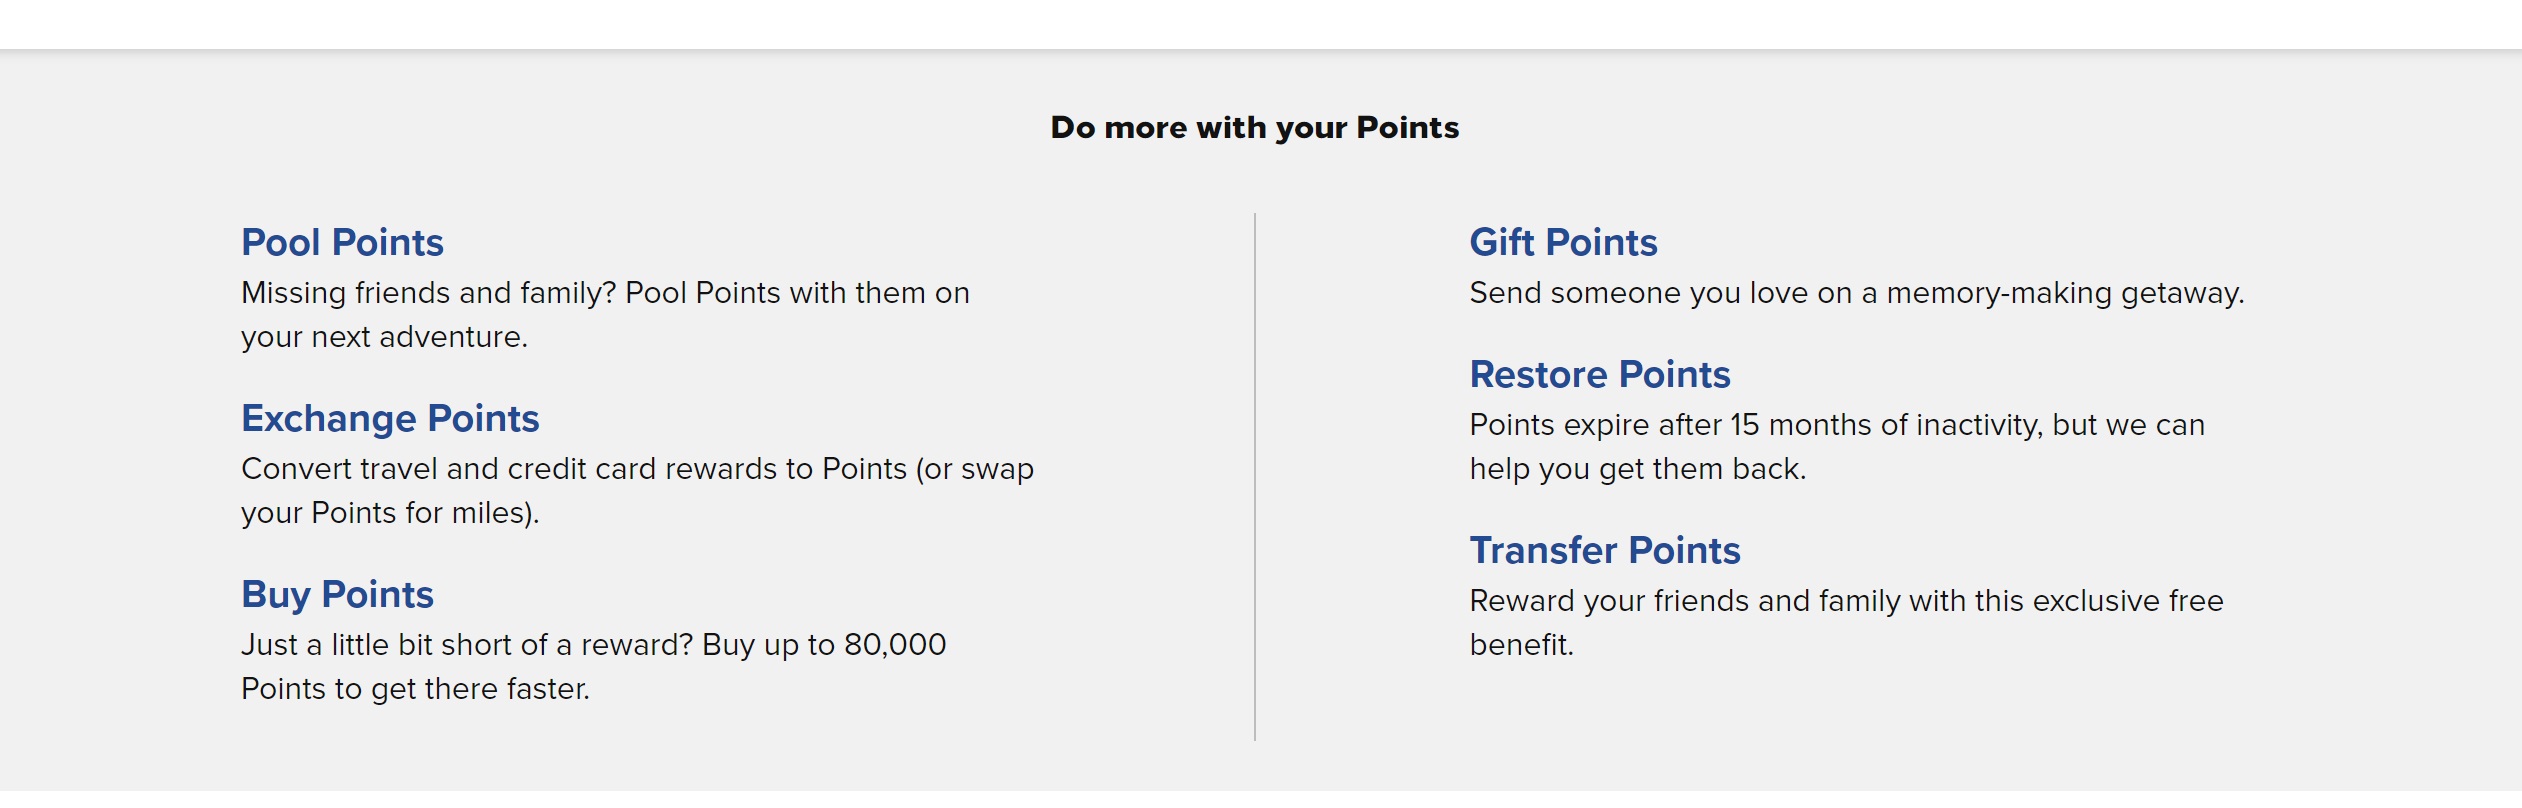 a screenshot of a gift points program